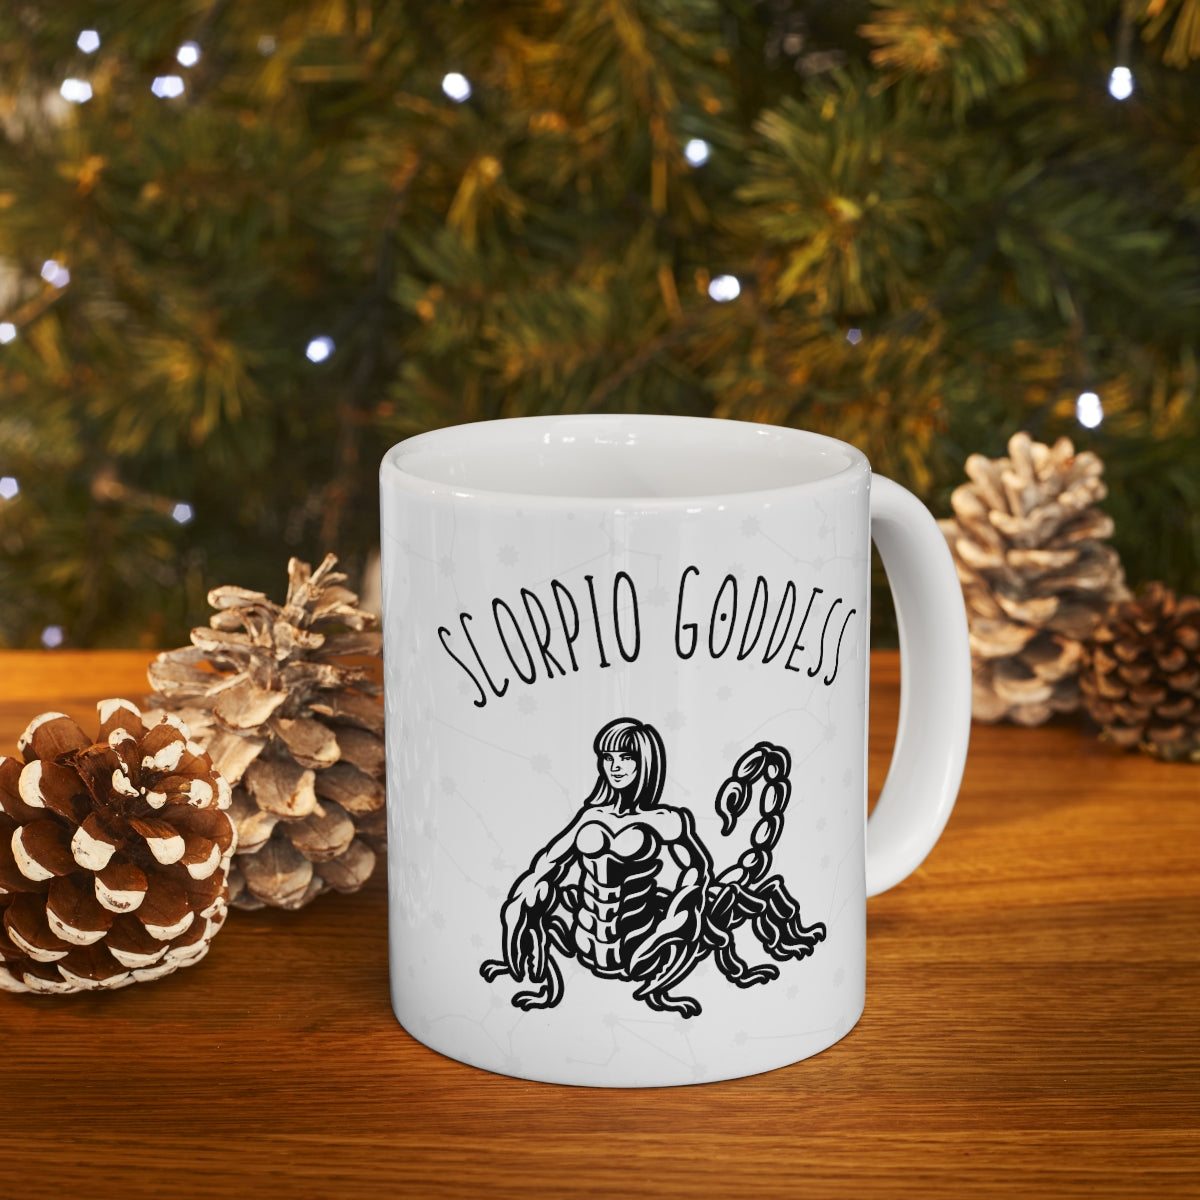 Scorpio Goddess Astrology Mug 8